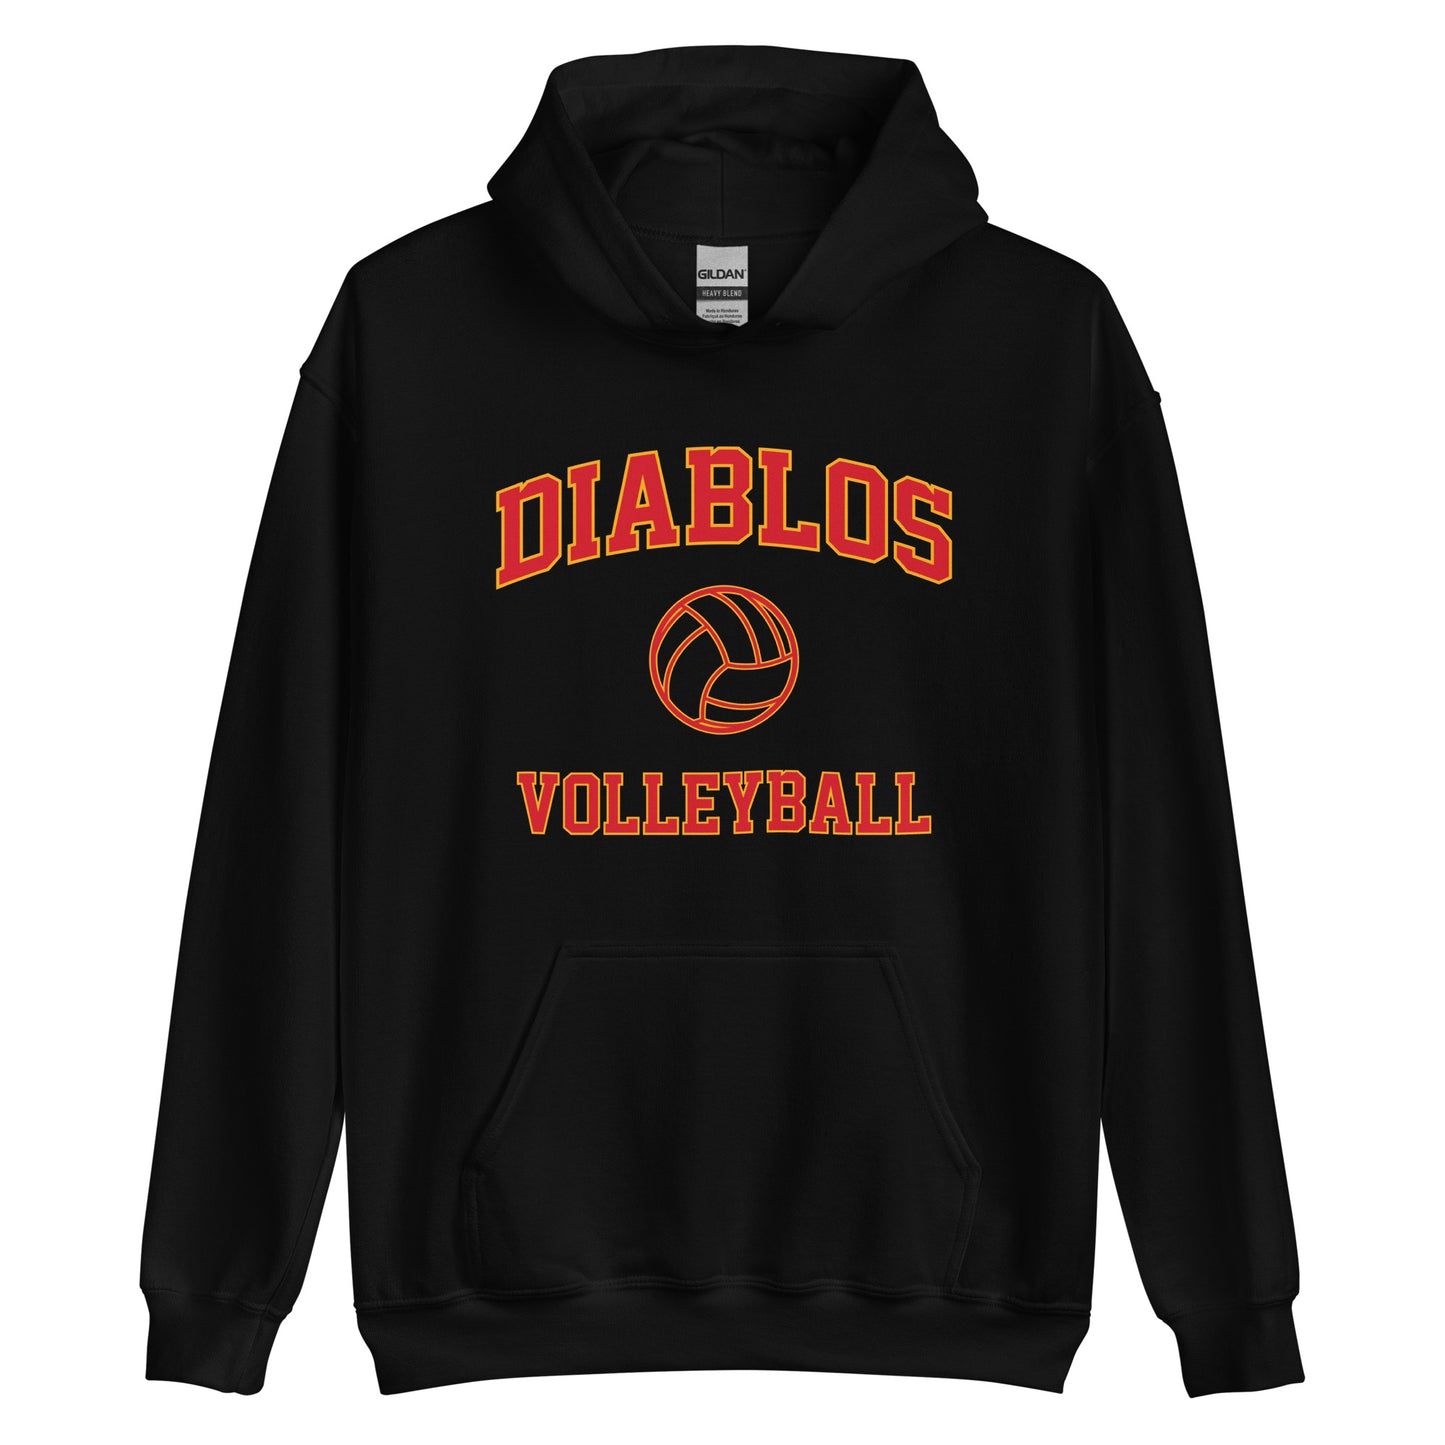 Diablos Volleyball Unisex Hoodie